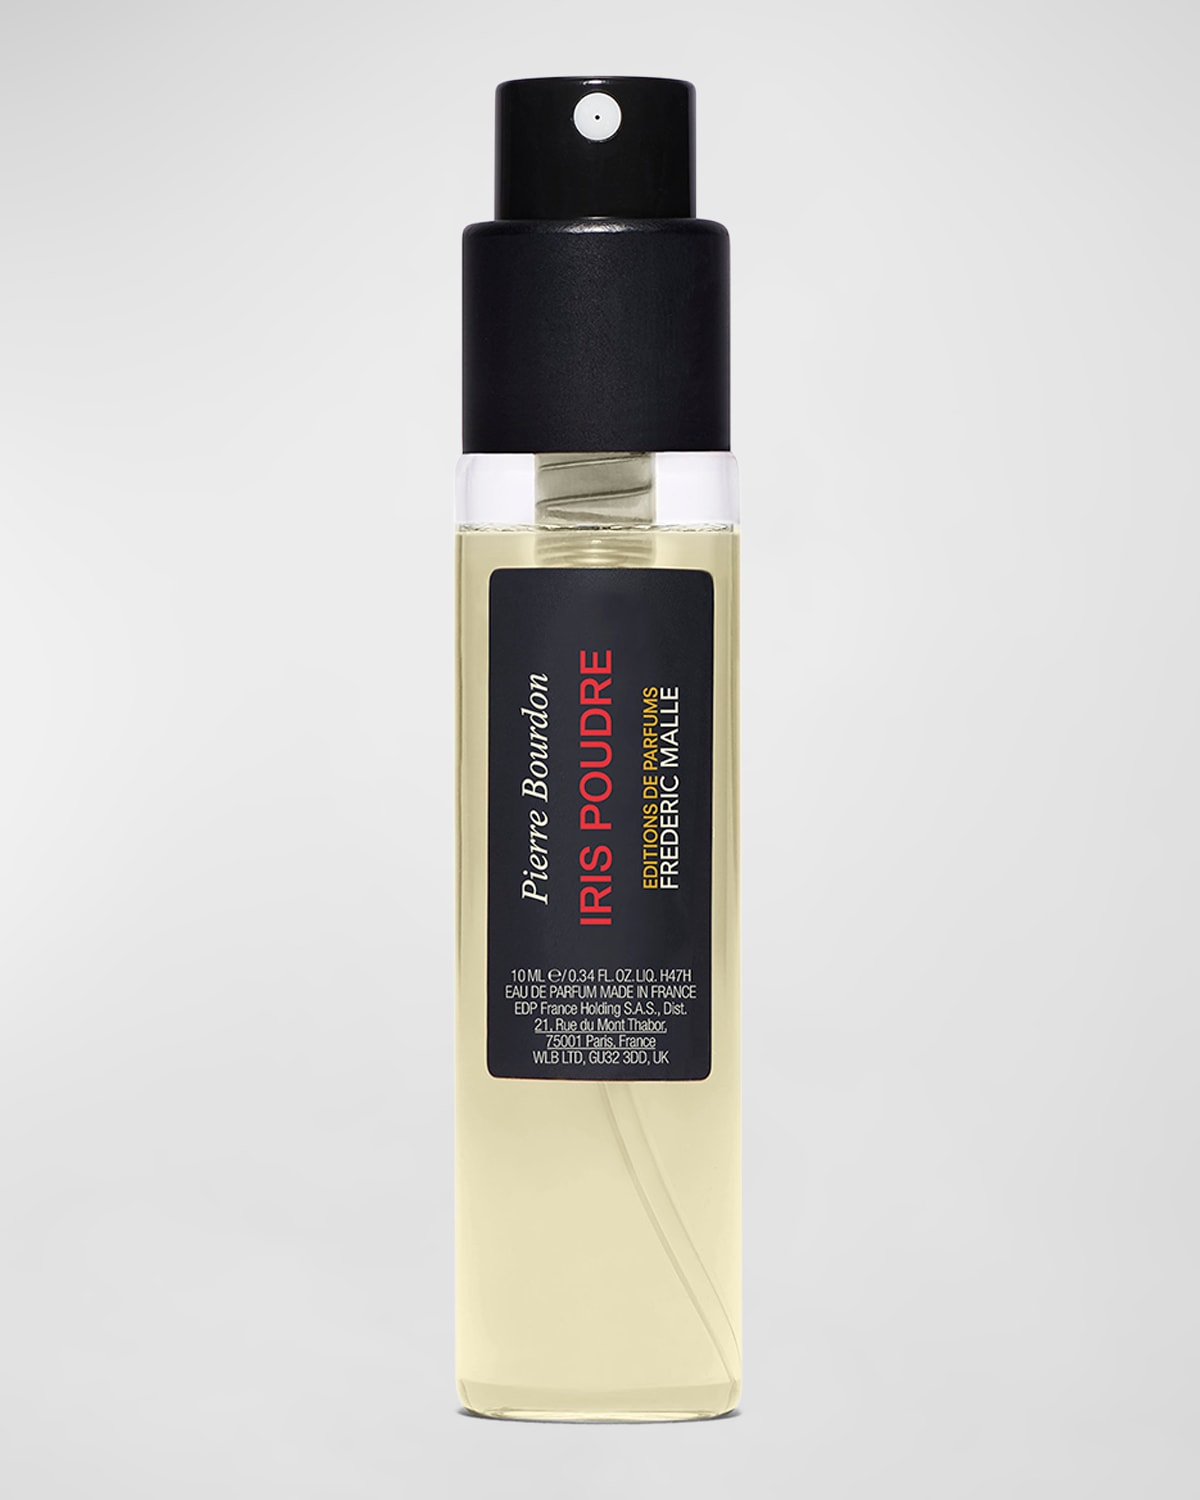 Lys Mediterranee Travel Perfume Refill, 0.3 oz.